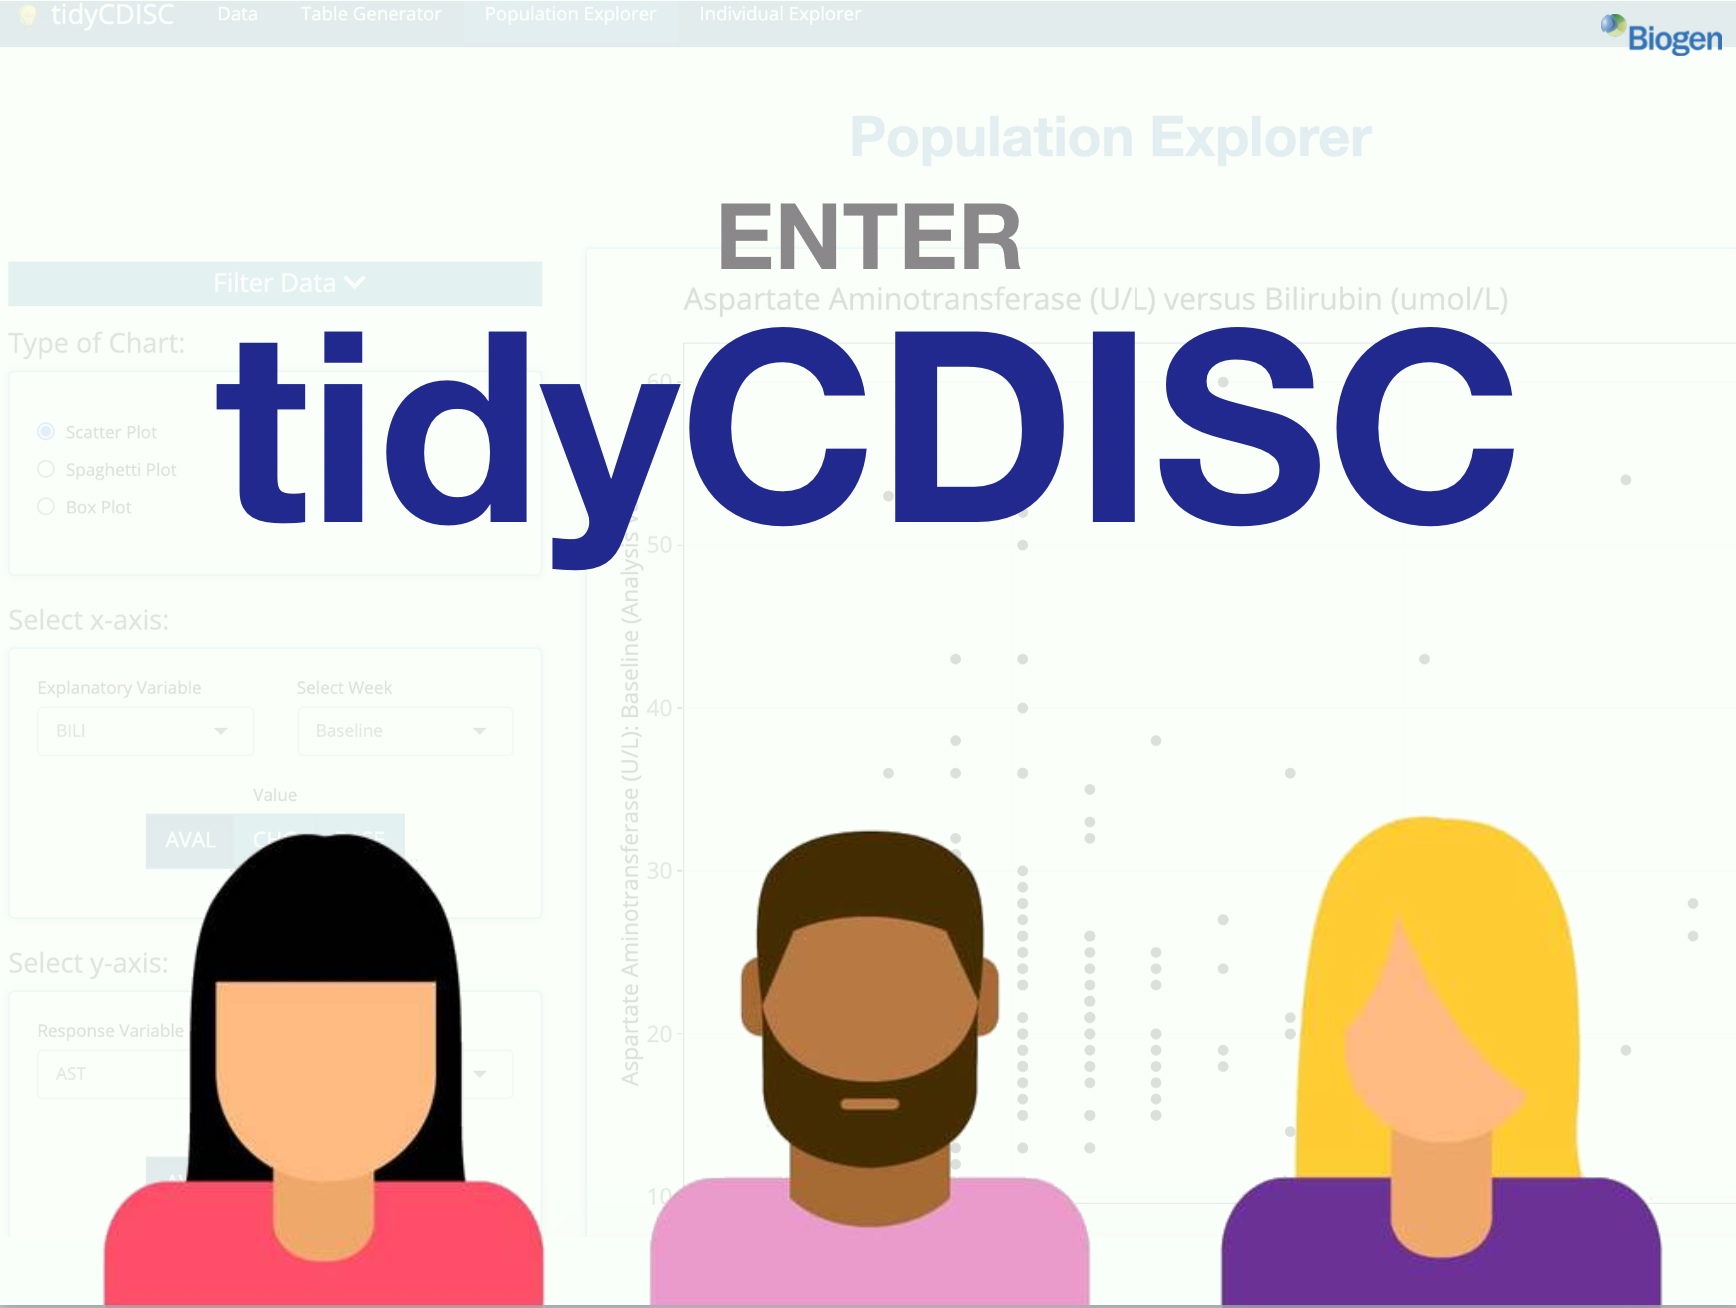 TidyCDISC cover photo